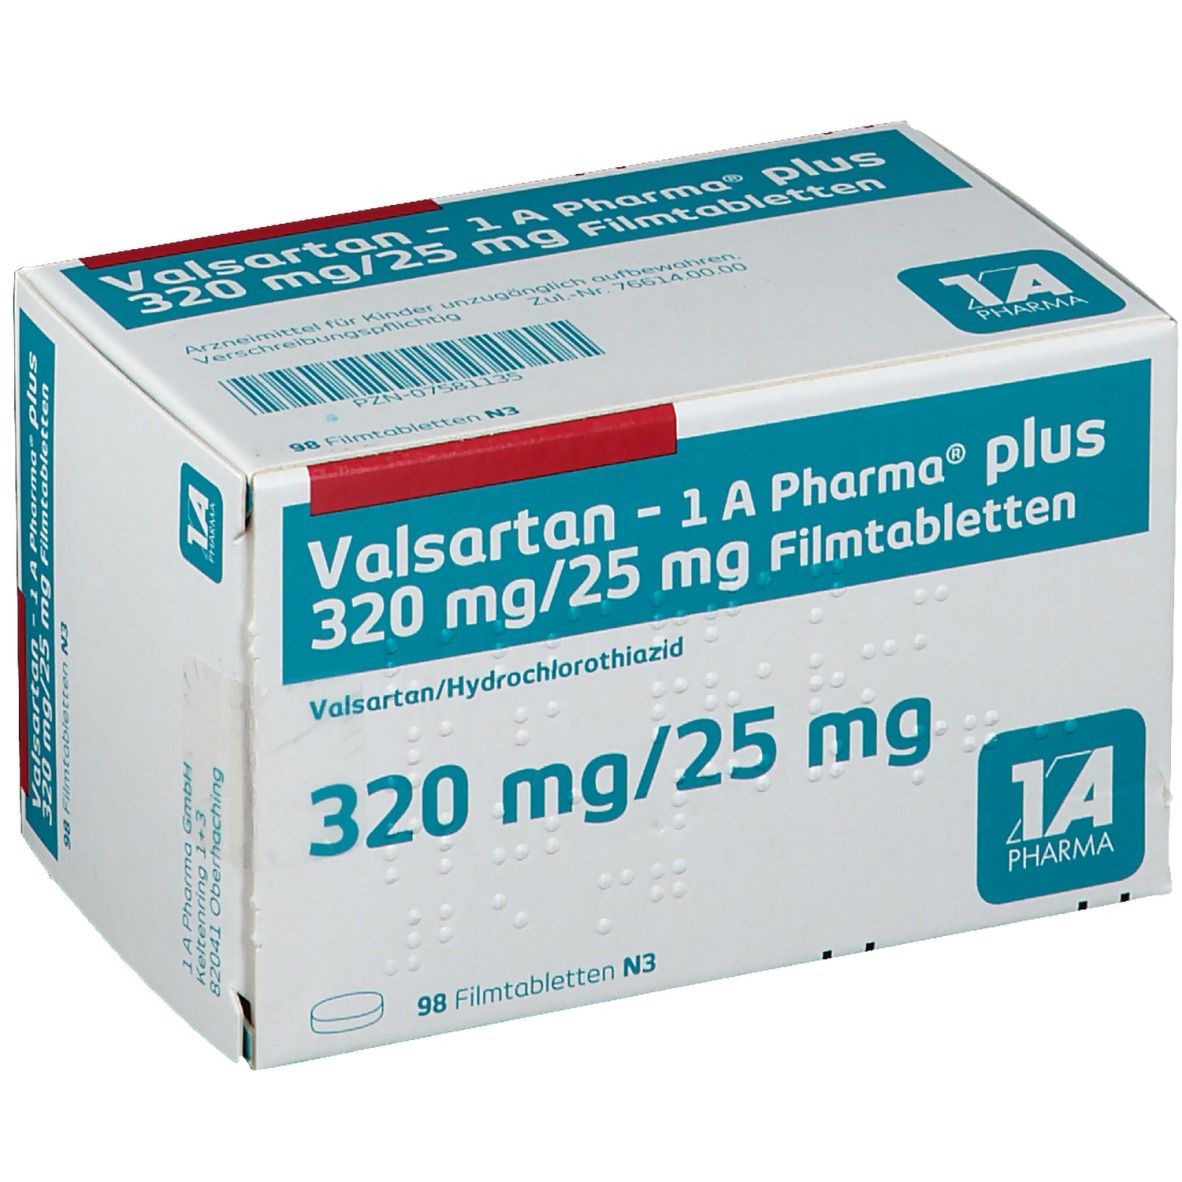 Valsartan - 1 A Pharma ® plus 320 mg/25 mg.